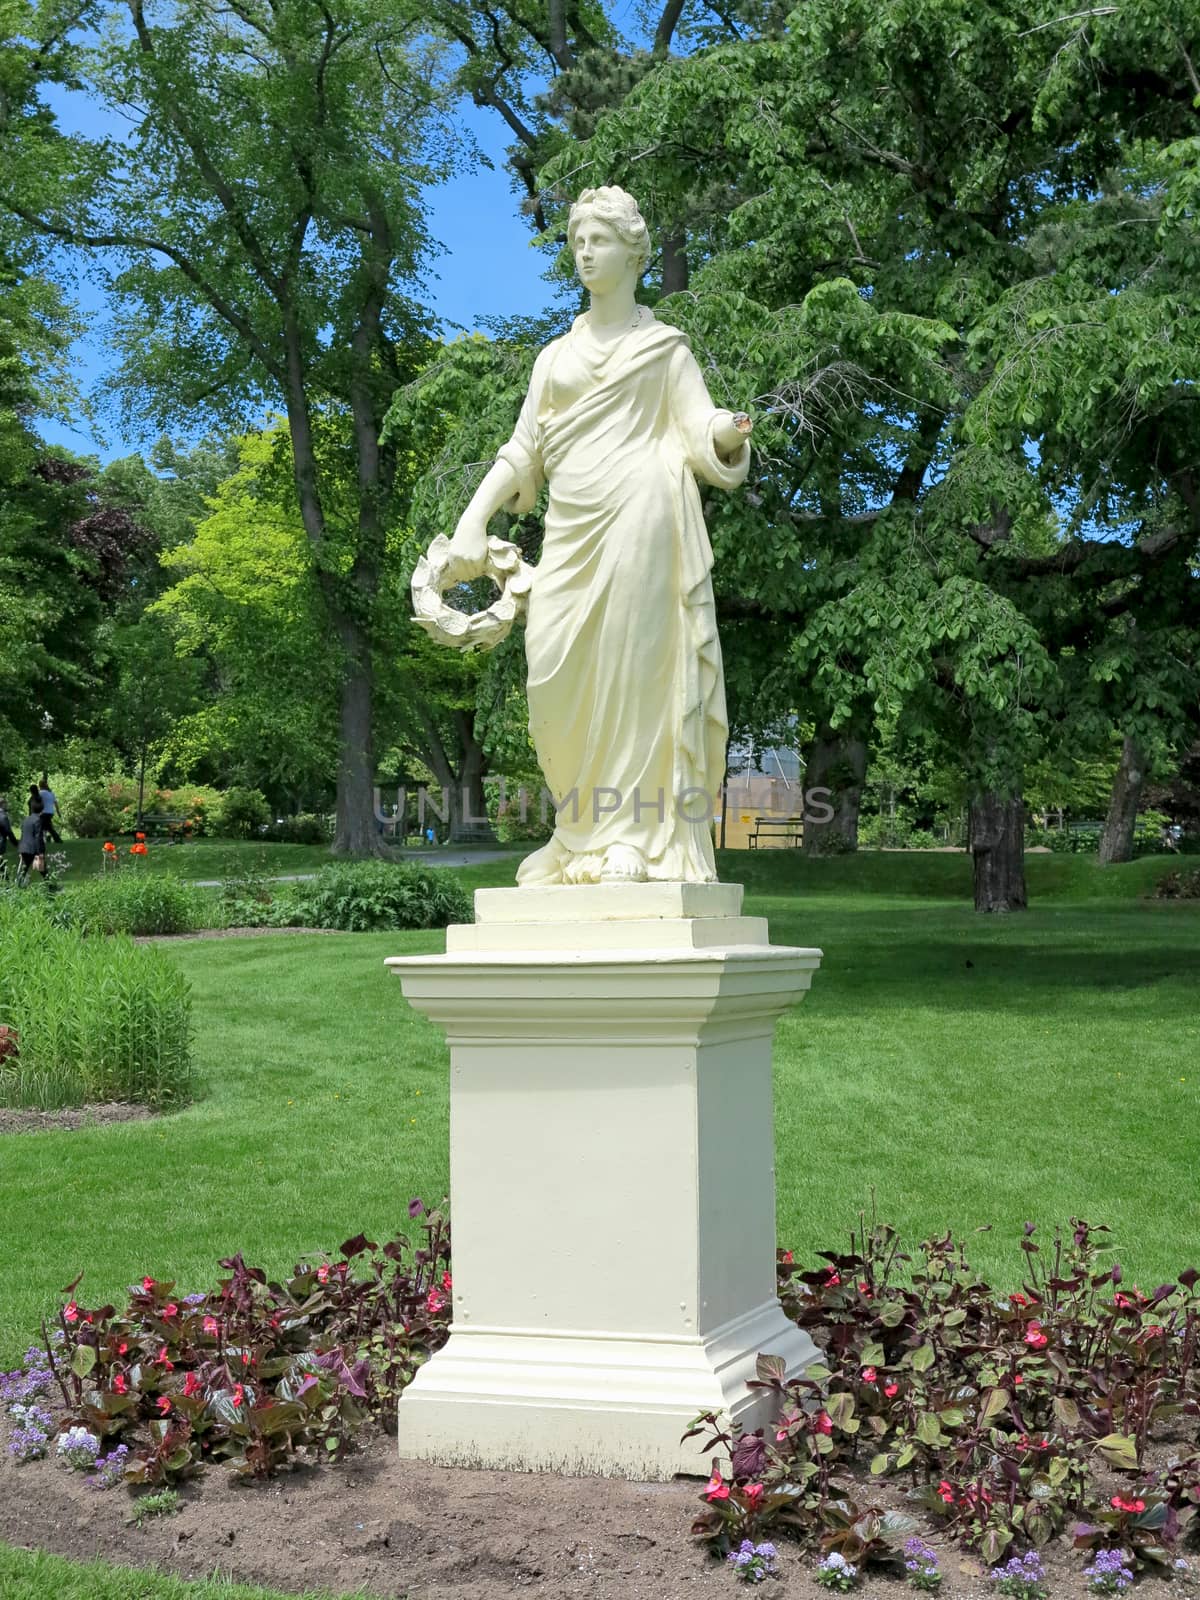 The Statue of the Roman Goddess Flora at the Halifax Public Gardens In Halifax, Nova Scotia, Canada